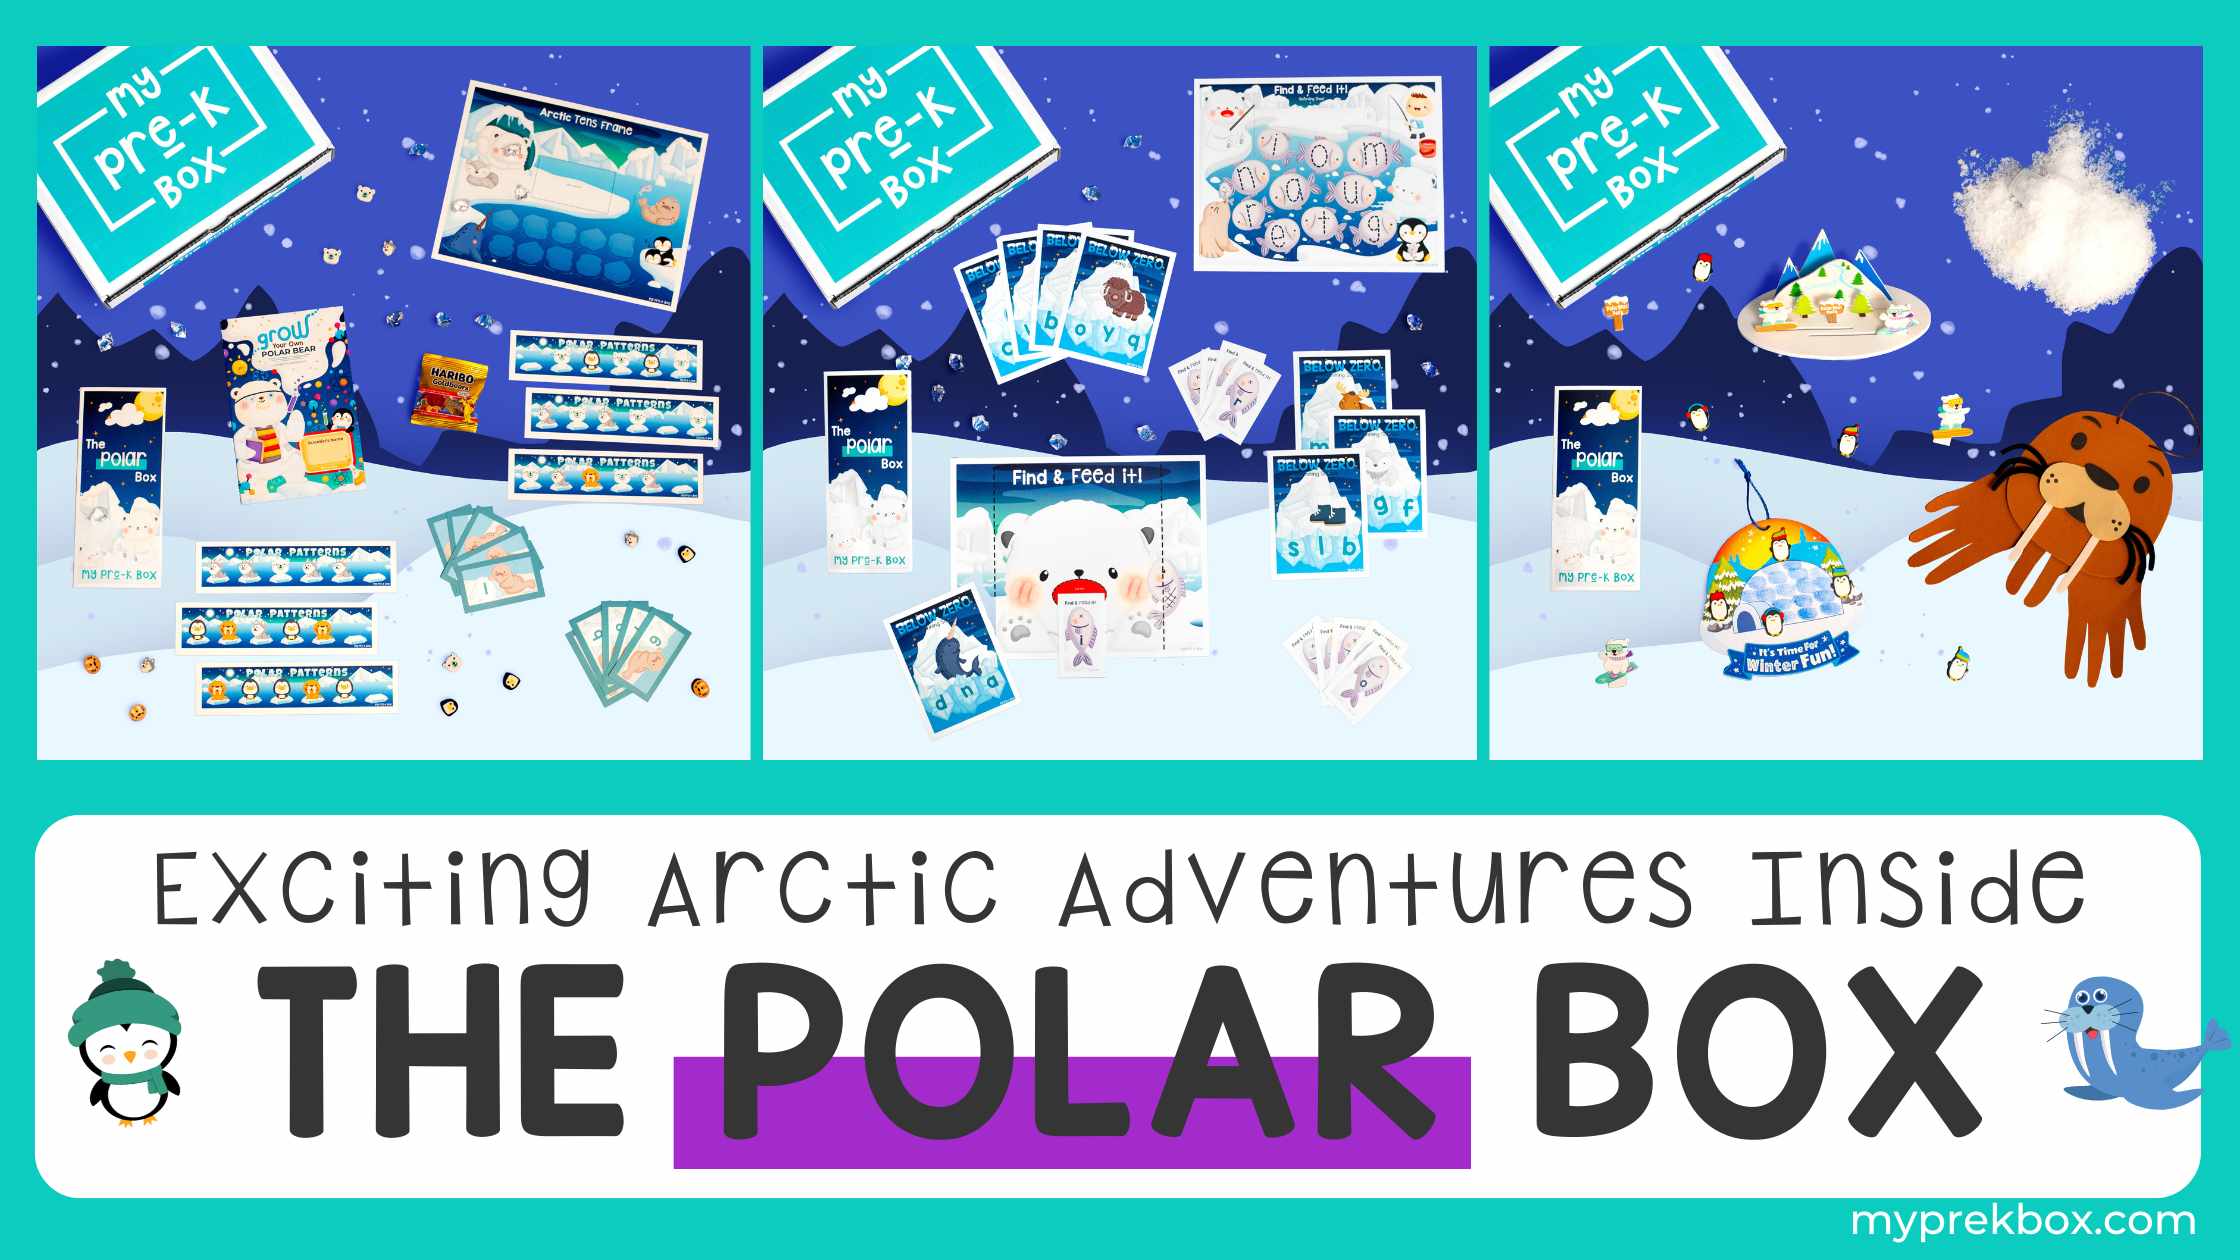 Exciting Arctic Adventures inside The Polar Box